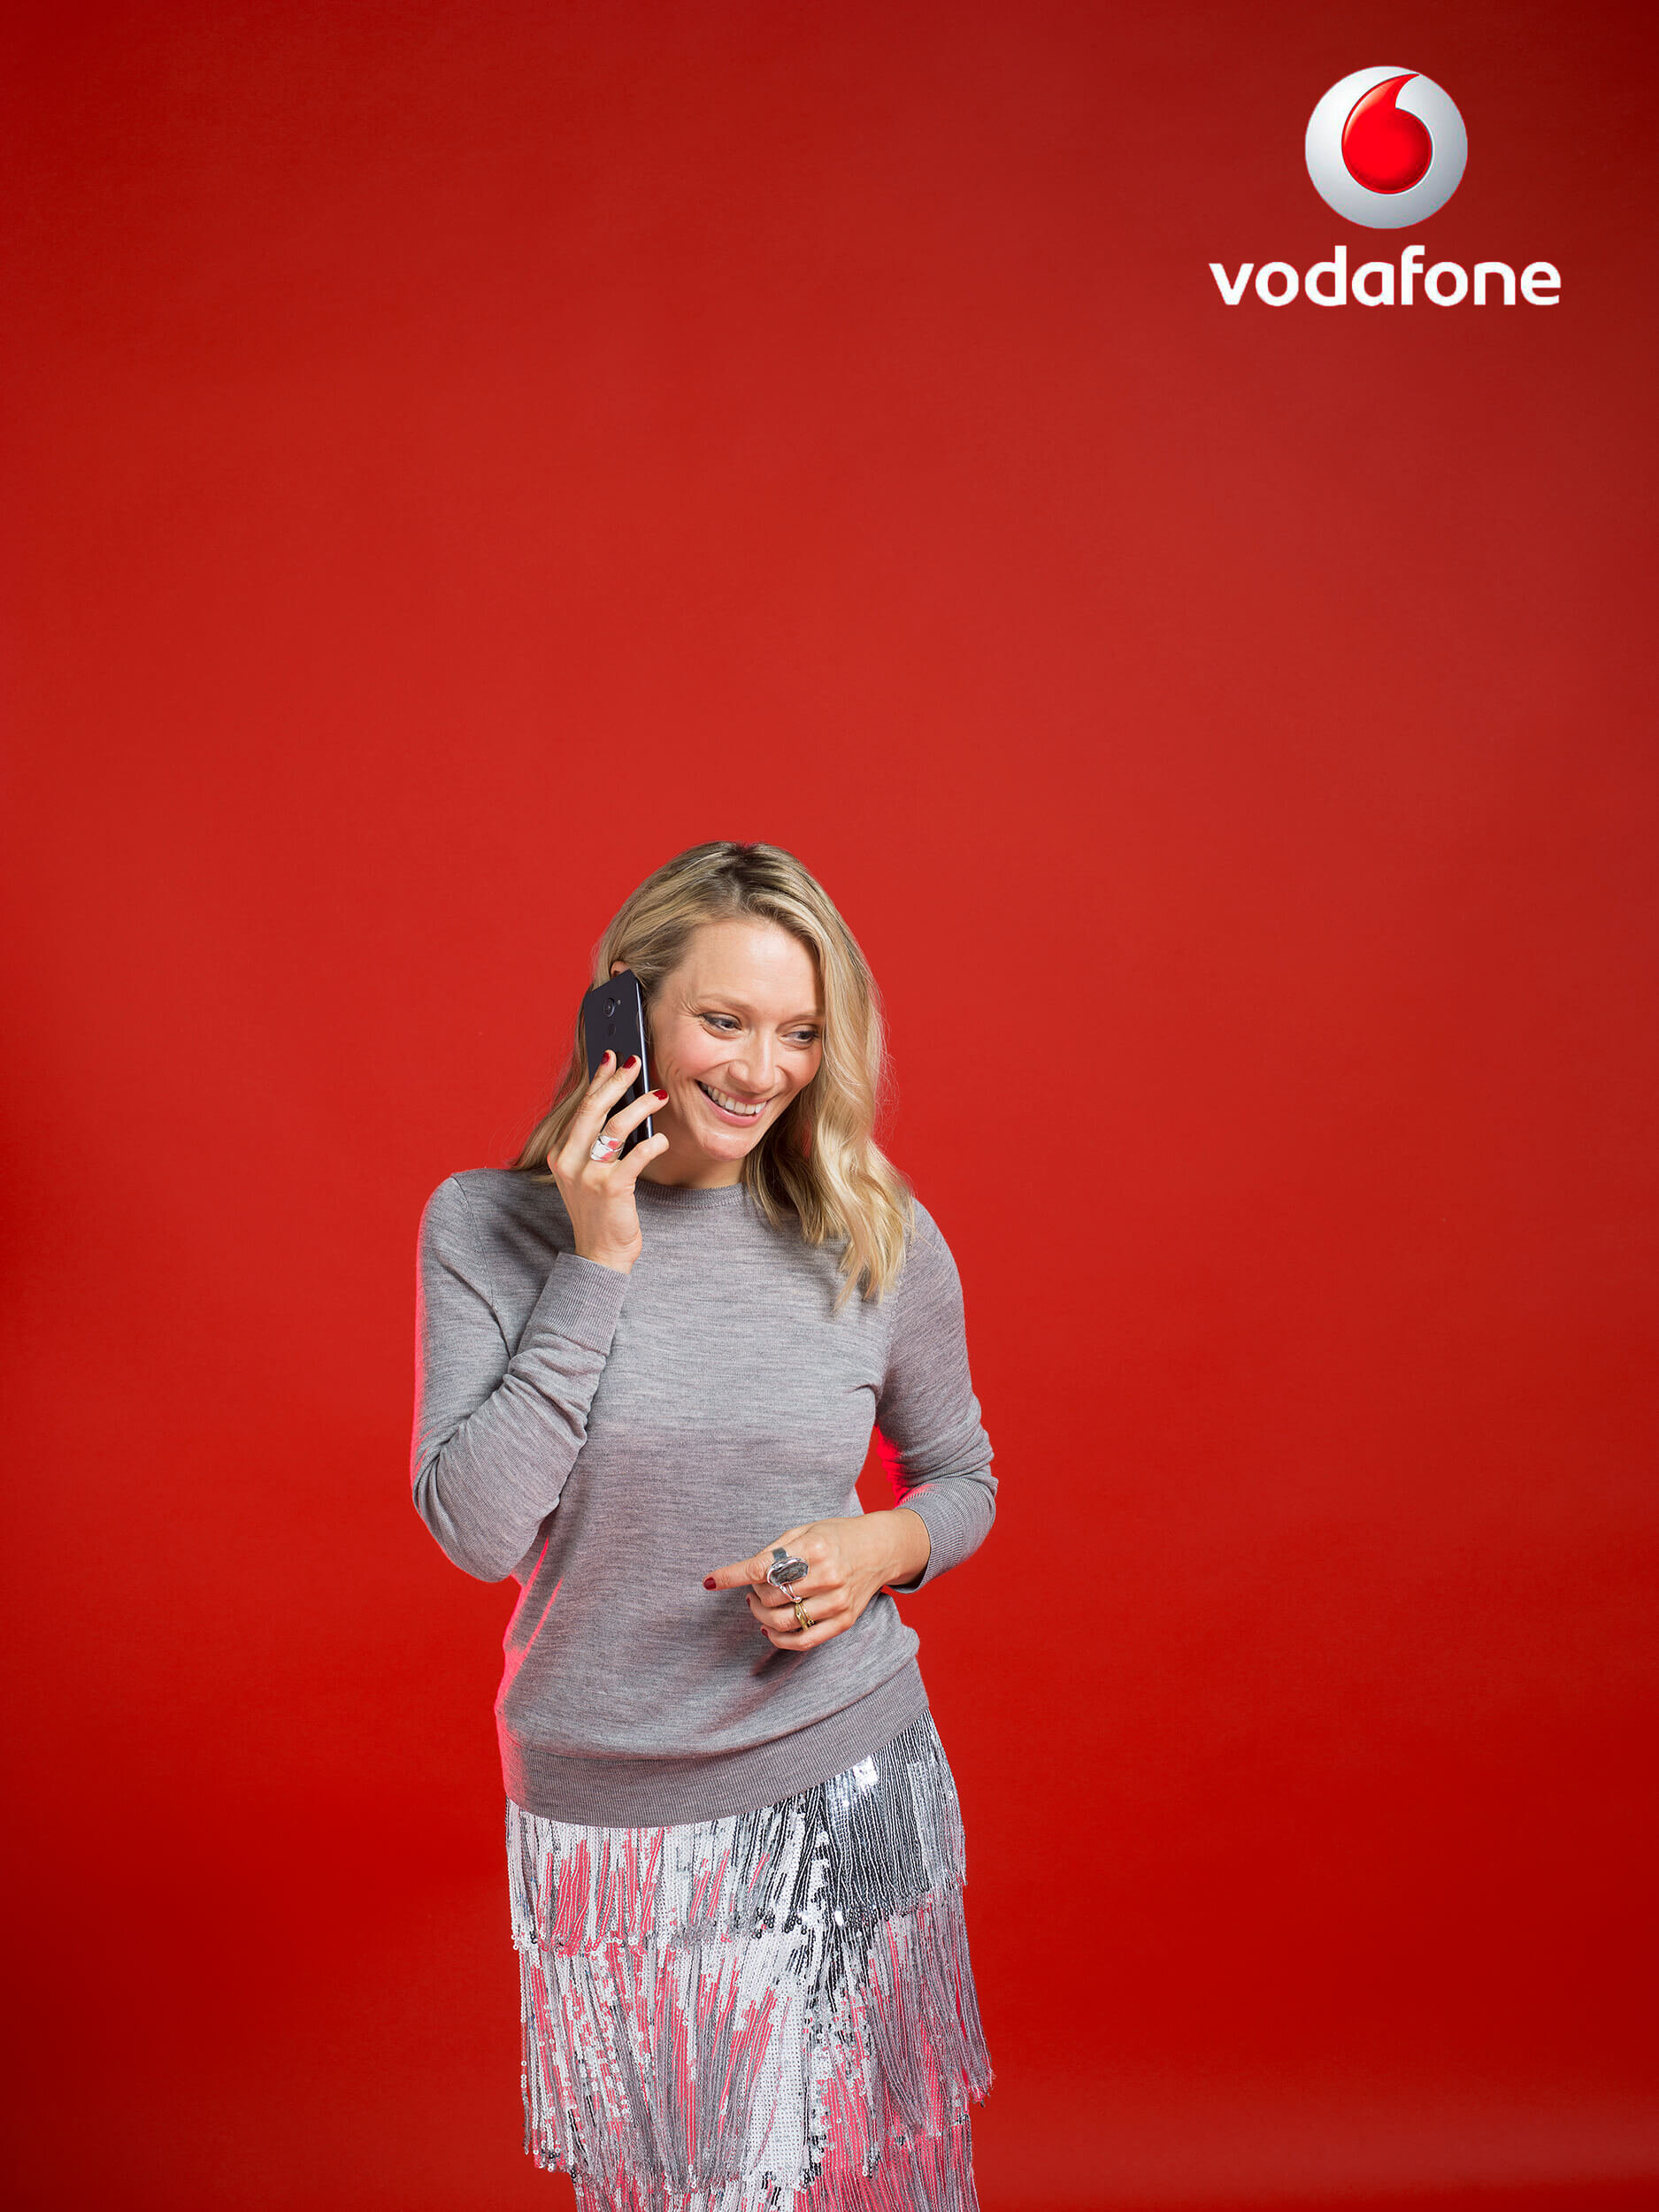 Vodafone_1433_v02 copy.jpg